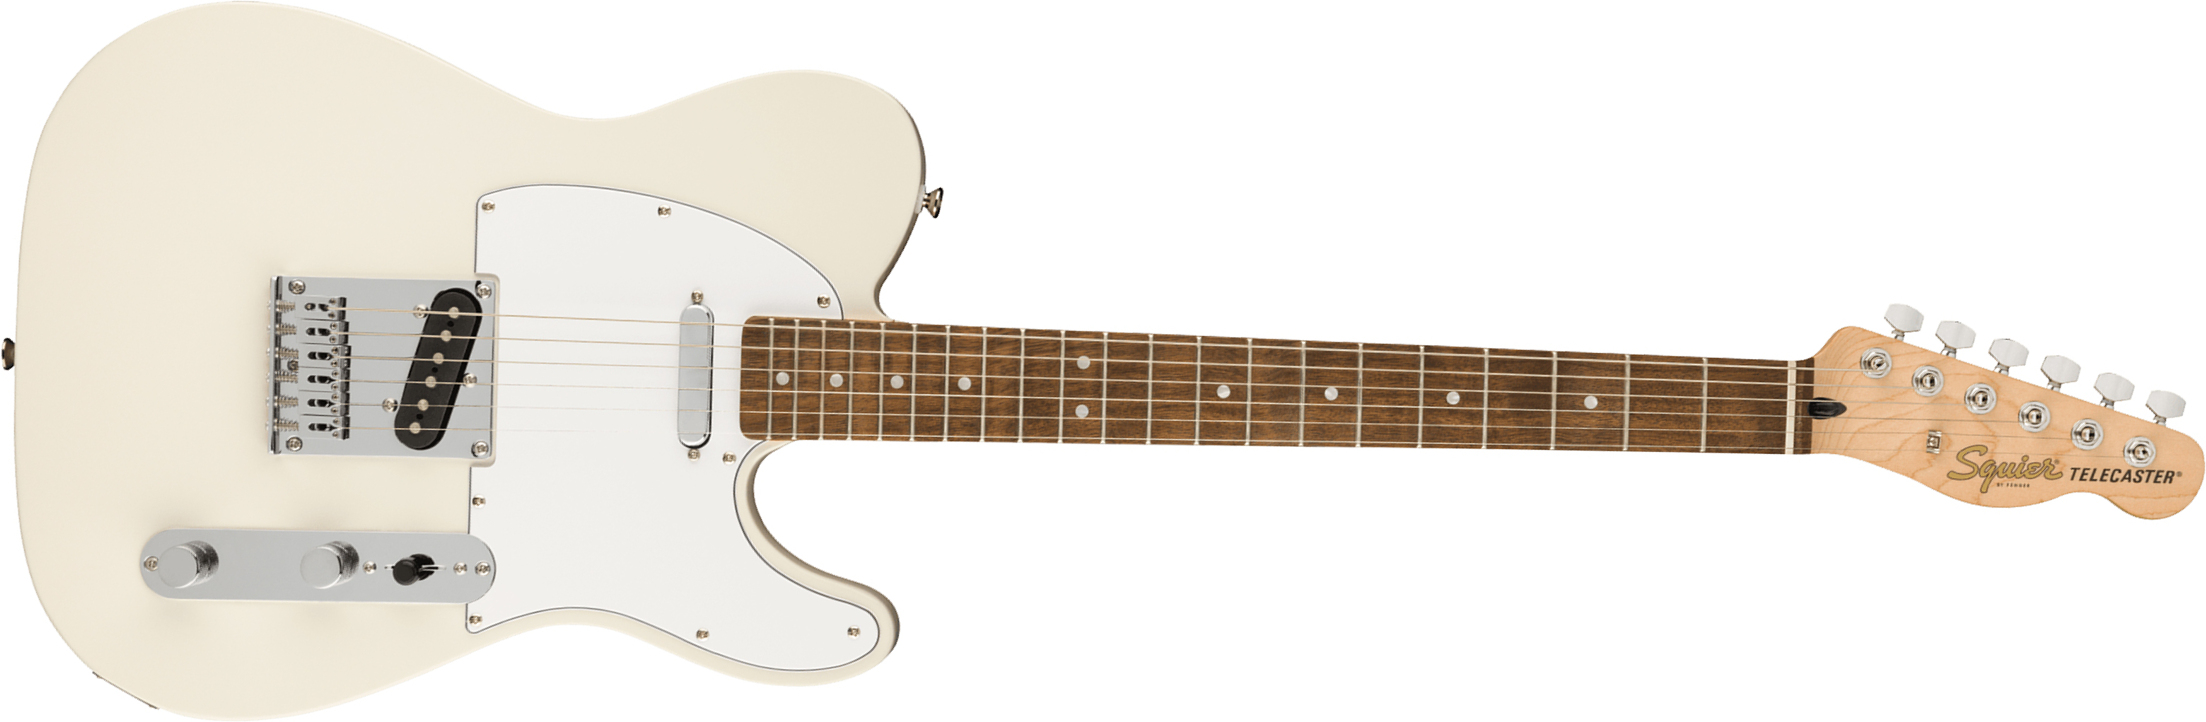 Squier Tele Affinity 2021 2s Lau - Olympic White - Guitarra eléctrica con forma de tel - Main picture